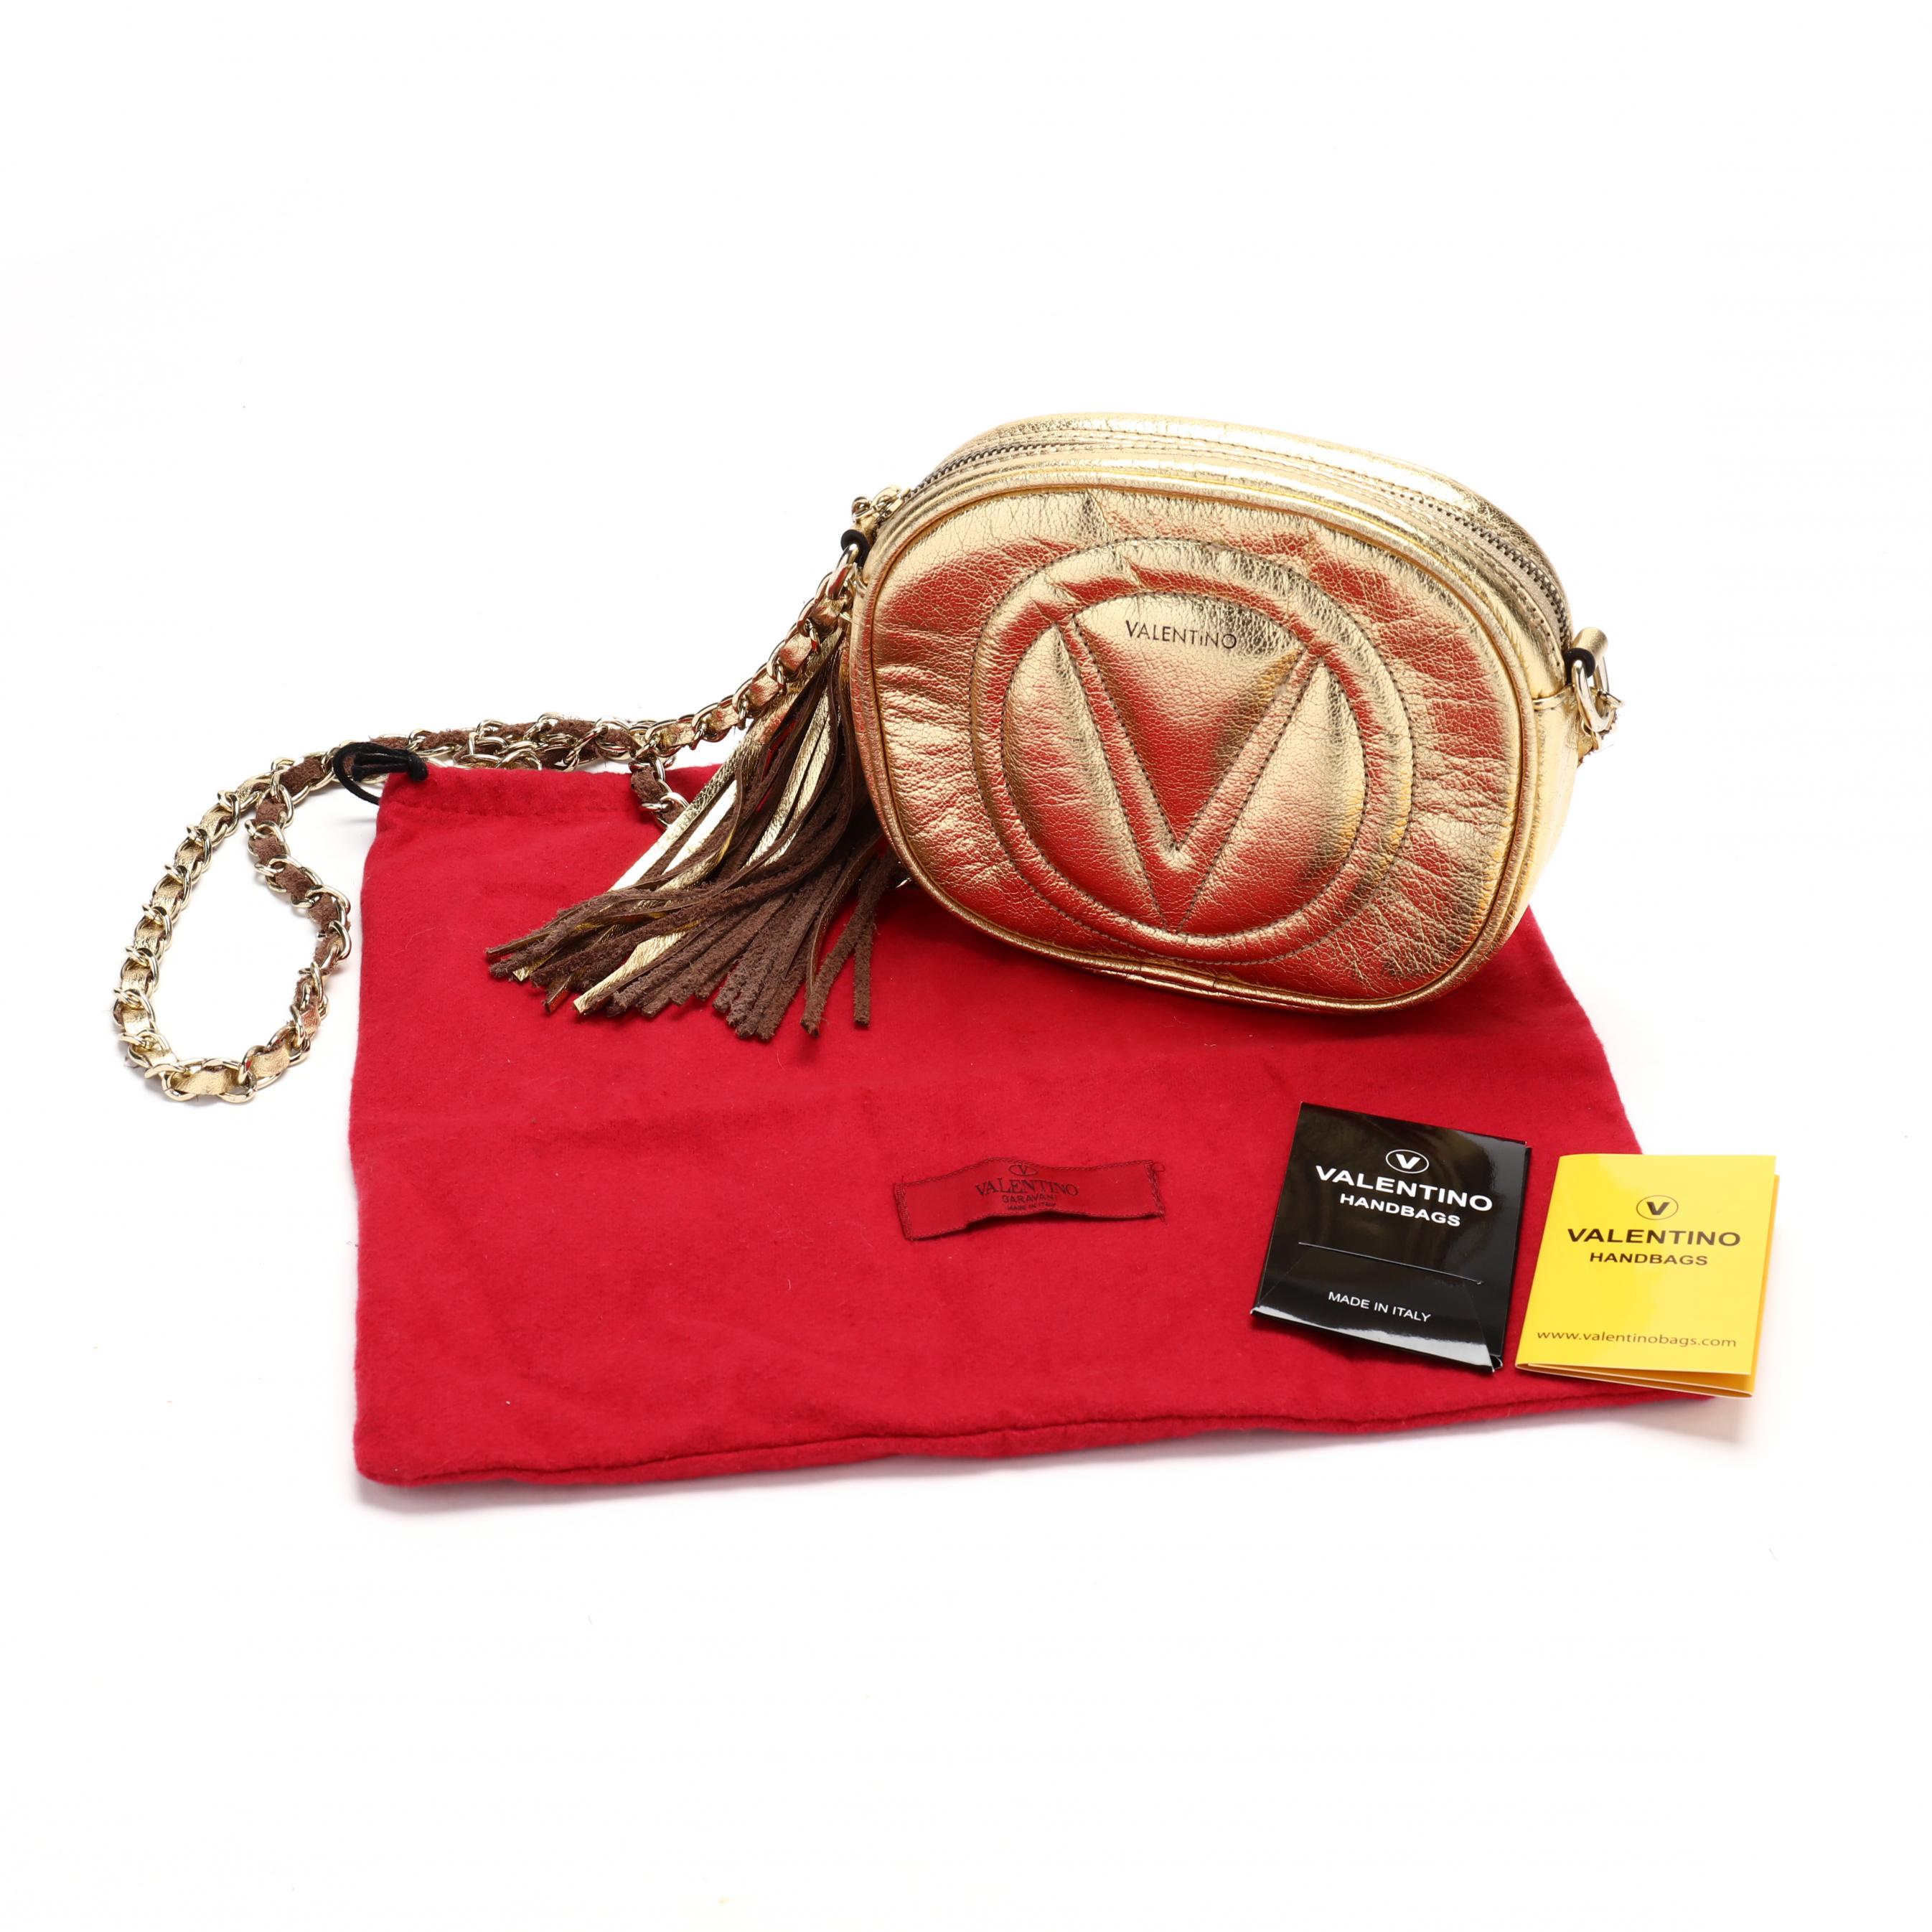 Metallic Gold Crossbody Bag, Mario Valentino Spa (Lot 1025